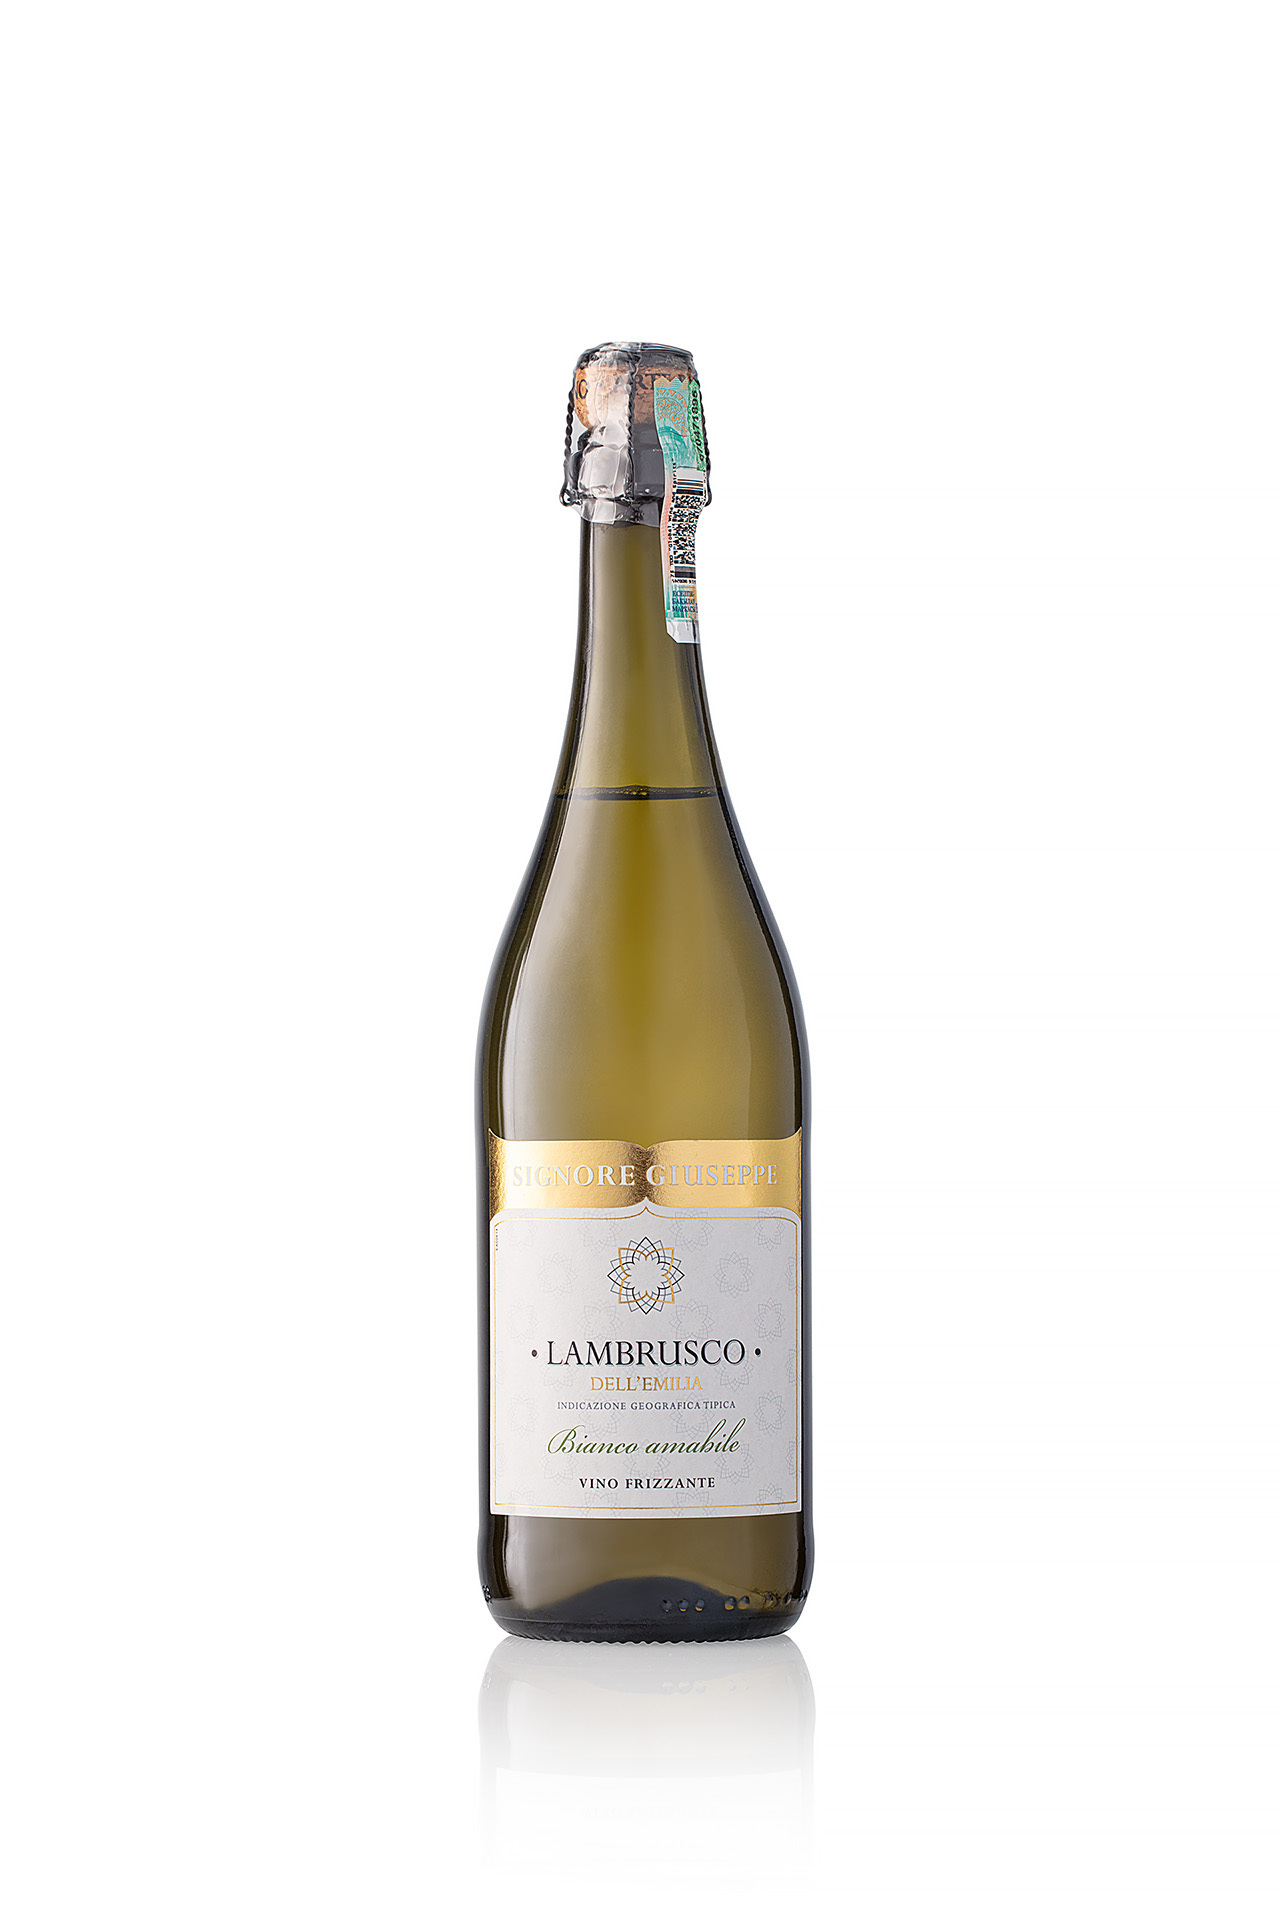 Lambrusco dell emilia цена. Шампанское Lambrusco Bianco dell Emilia. Игристое вино Lambrusco dell'Emilia Bianco signore Giuseppe. Вино signore Giuseppe.